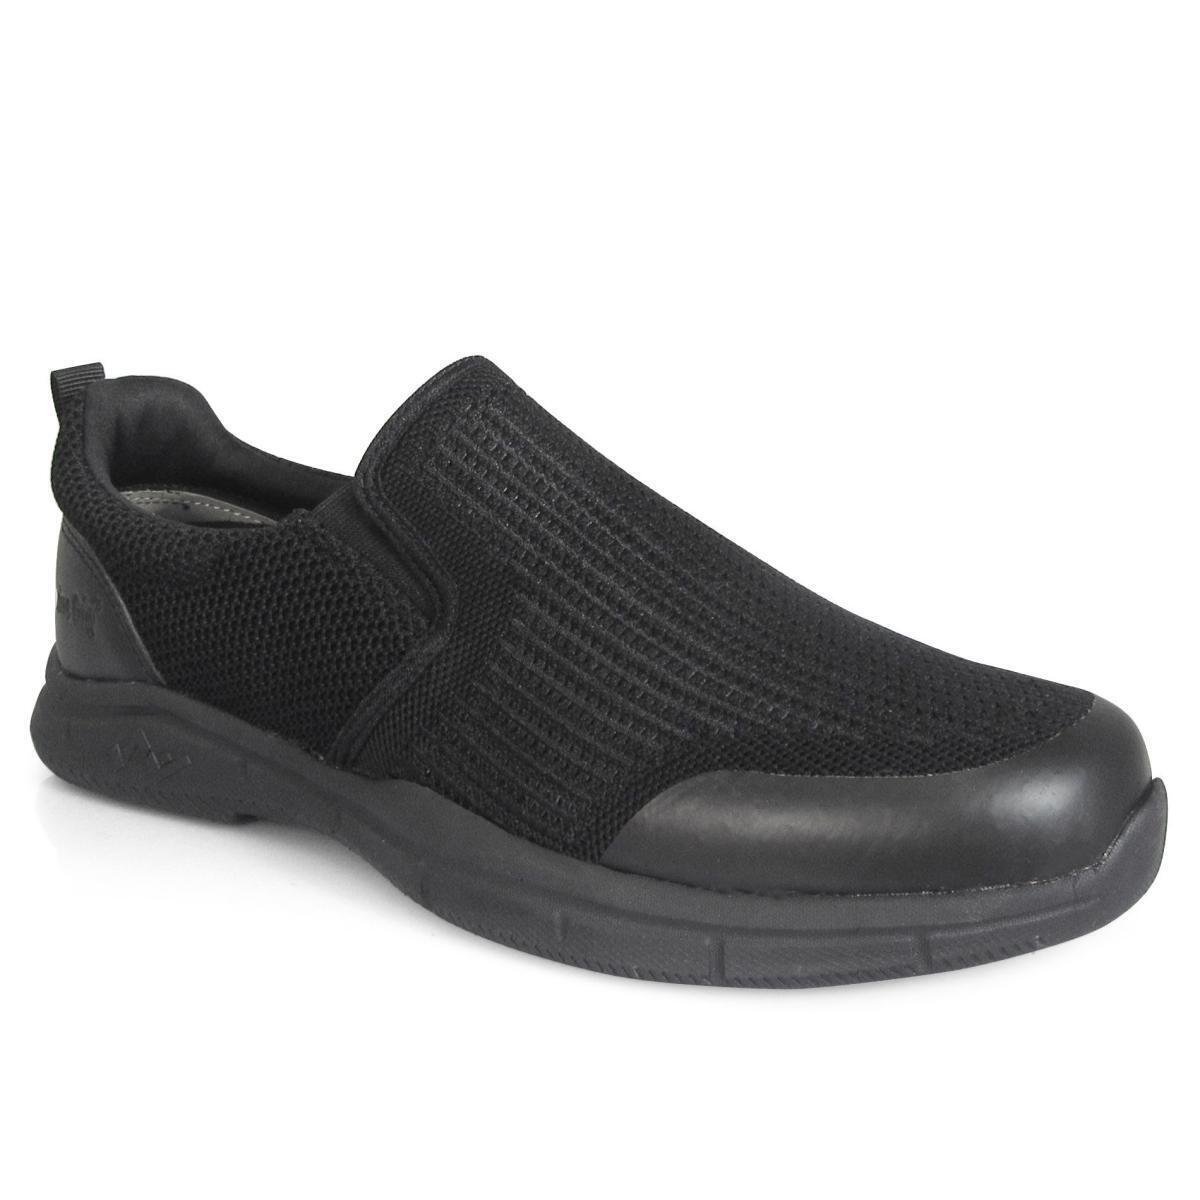 Genuine Grip 1700-7.5M Men Slip-On Water Repellent Shoe, Black - Size 7.5 Medium